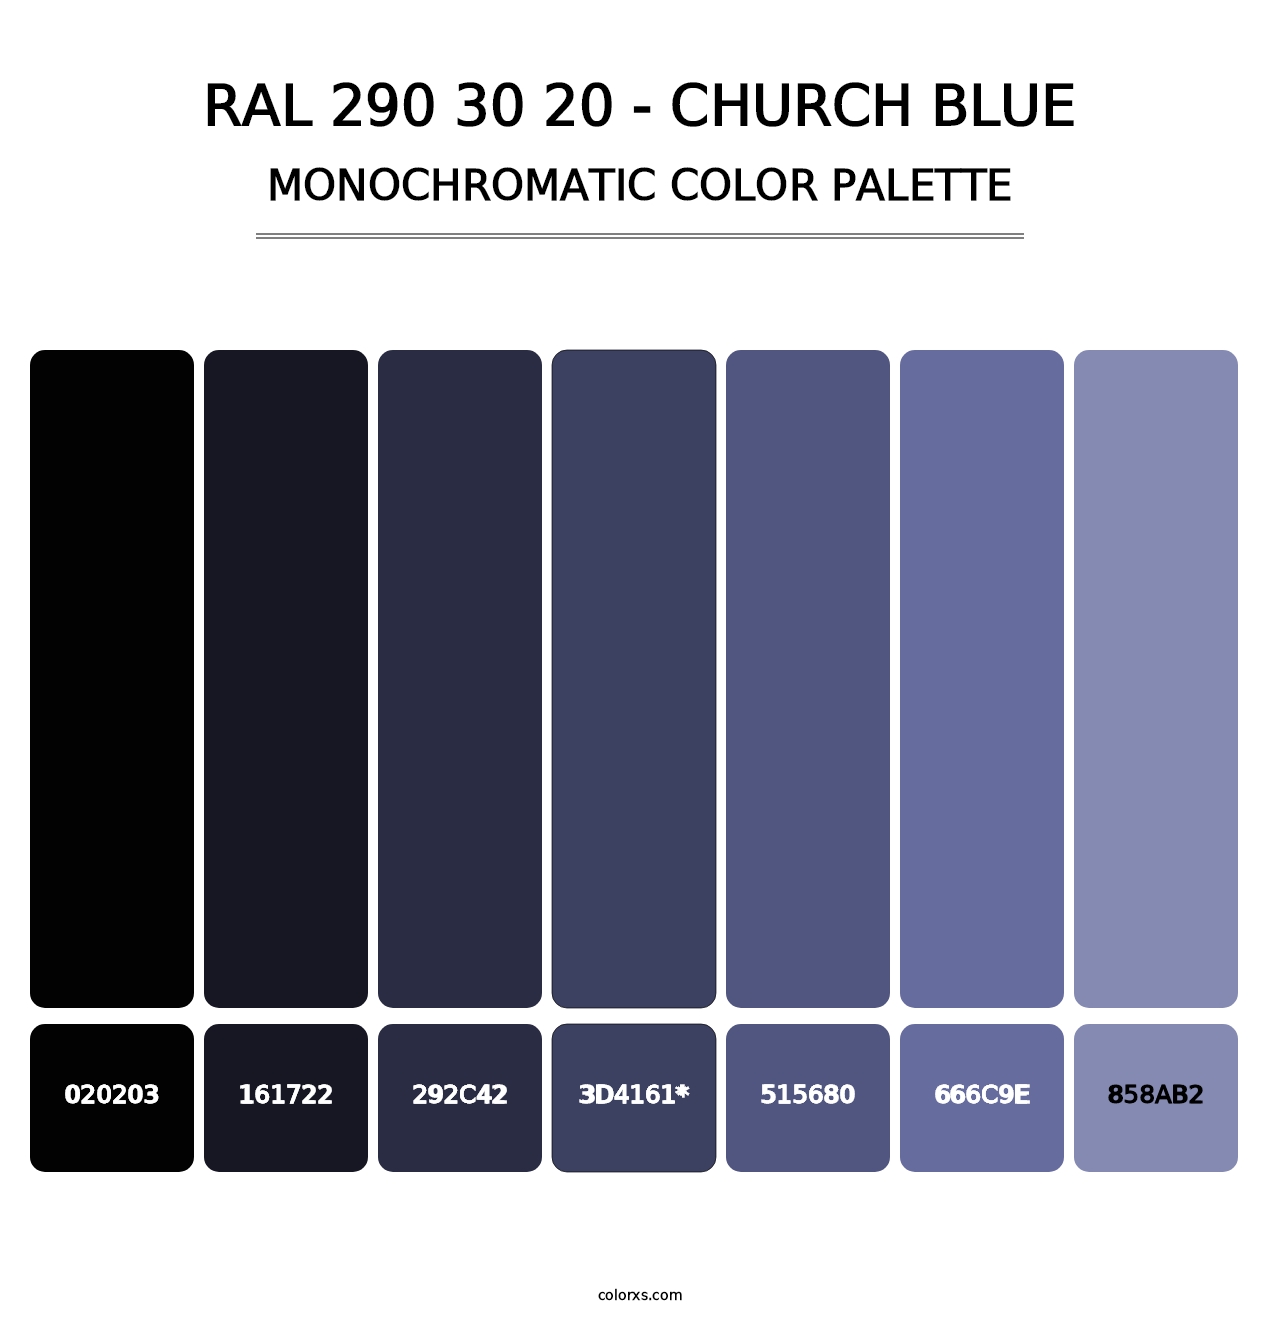 RAL 290 30 20 - Church Blue - Monochromatic Color Palette